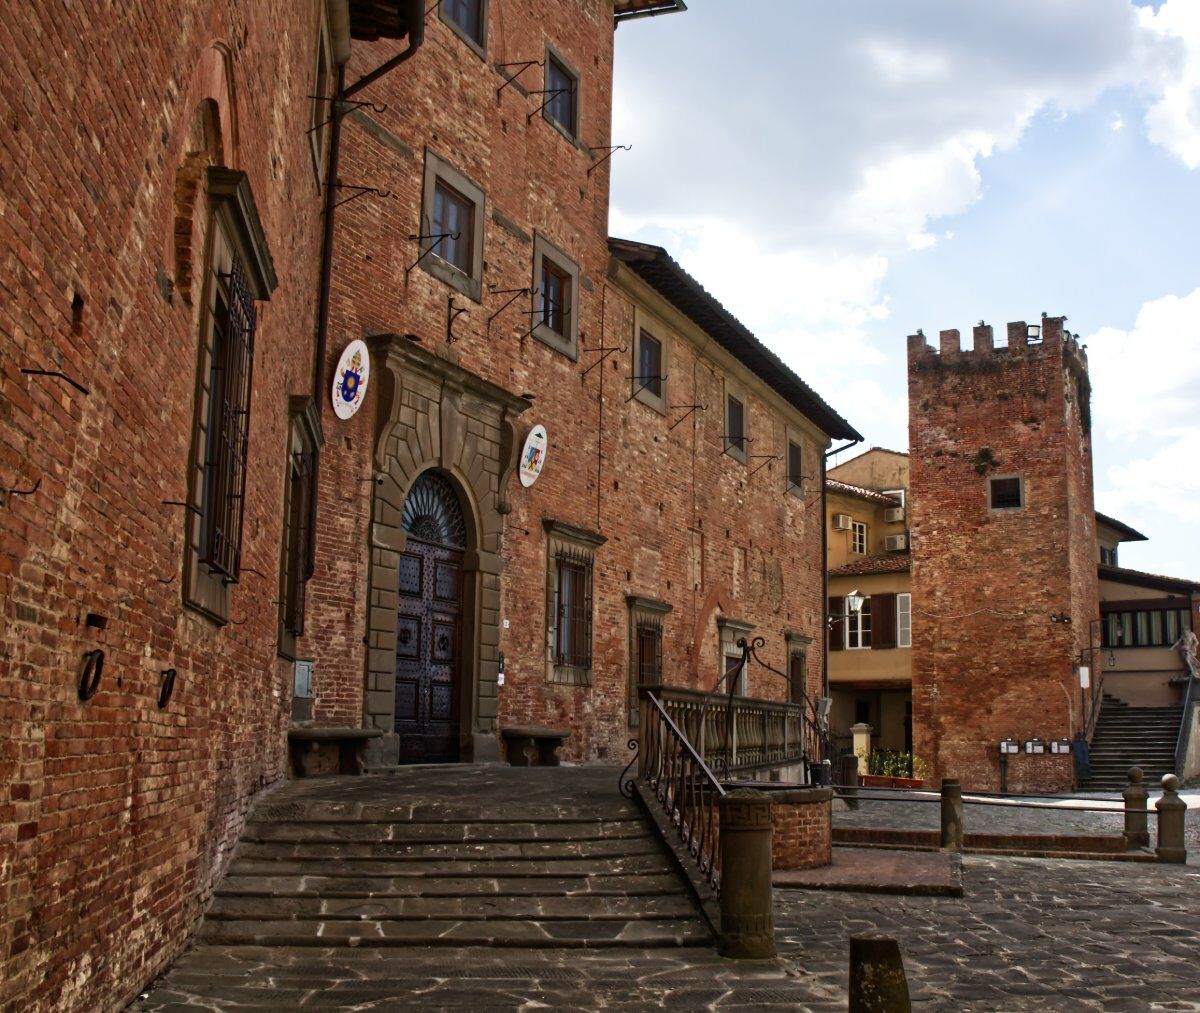 Tour di San Miniato: L'Incantevole Gemma Tra Pisa e Firenze desktop picture